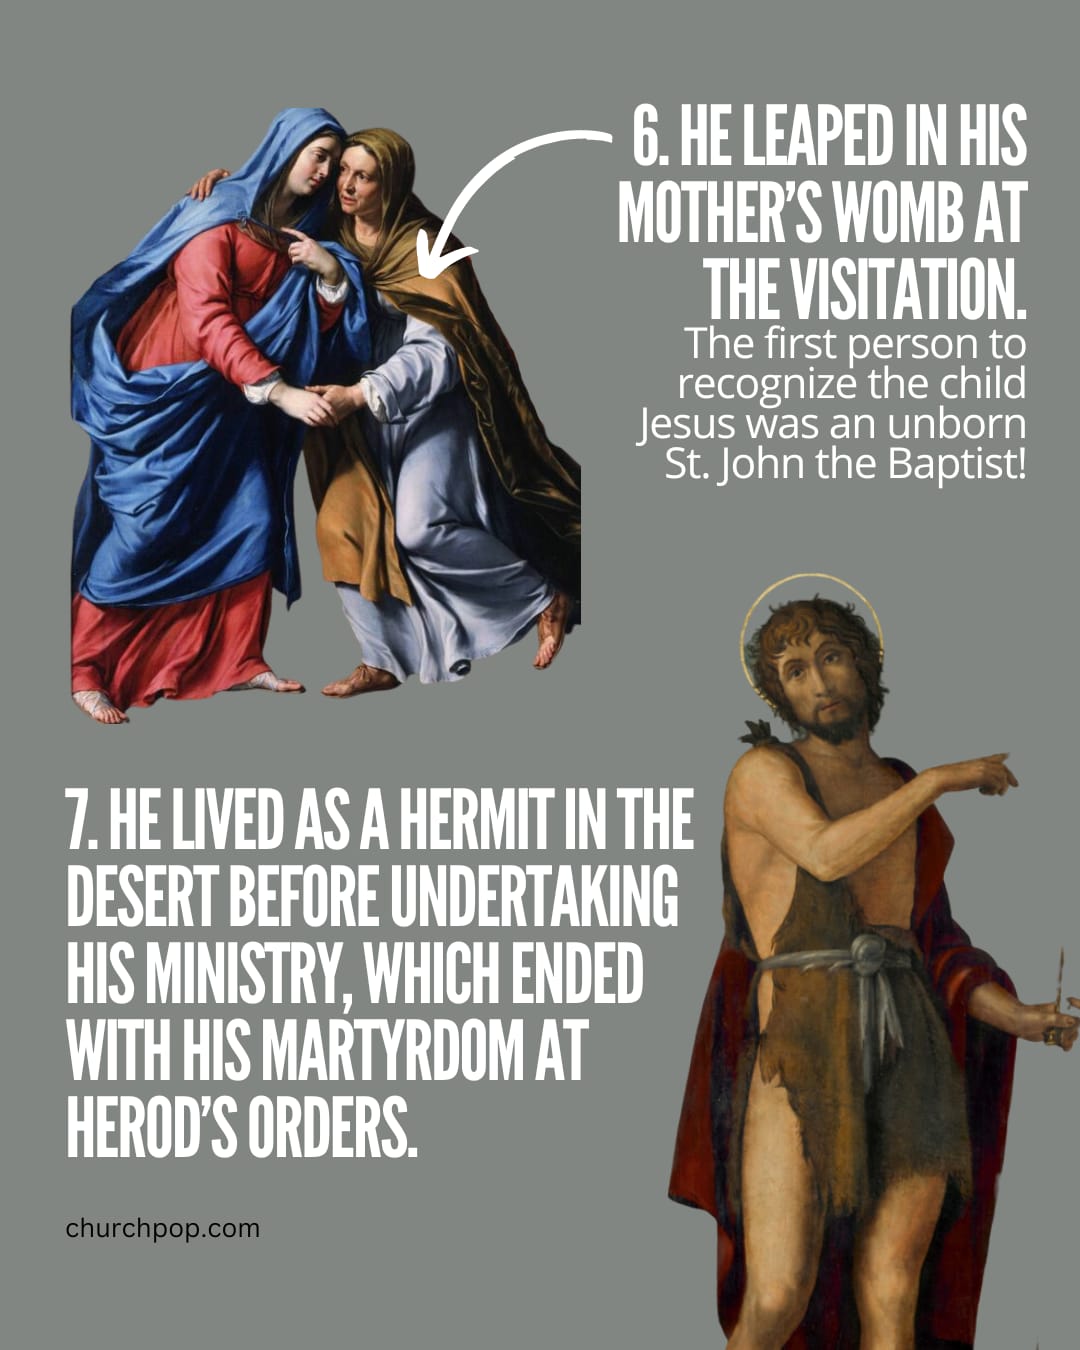 What John the Baptist did